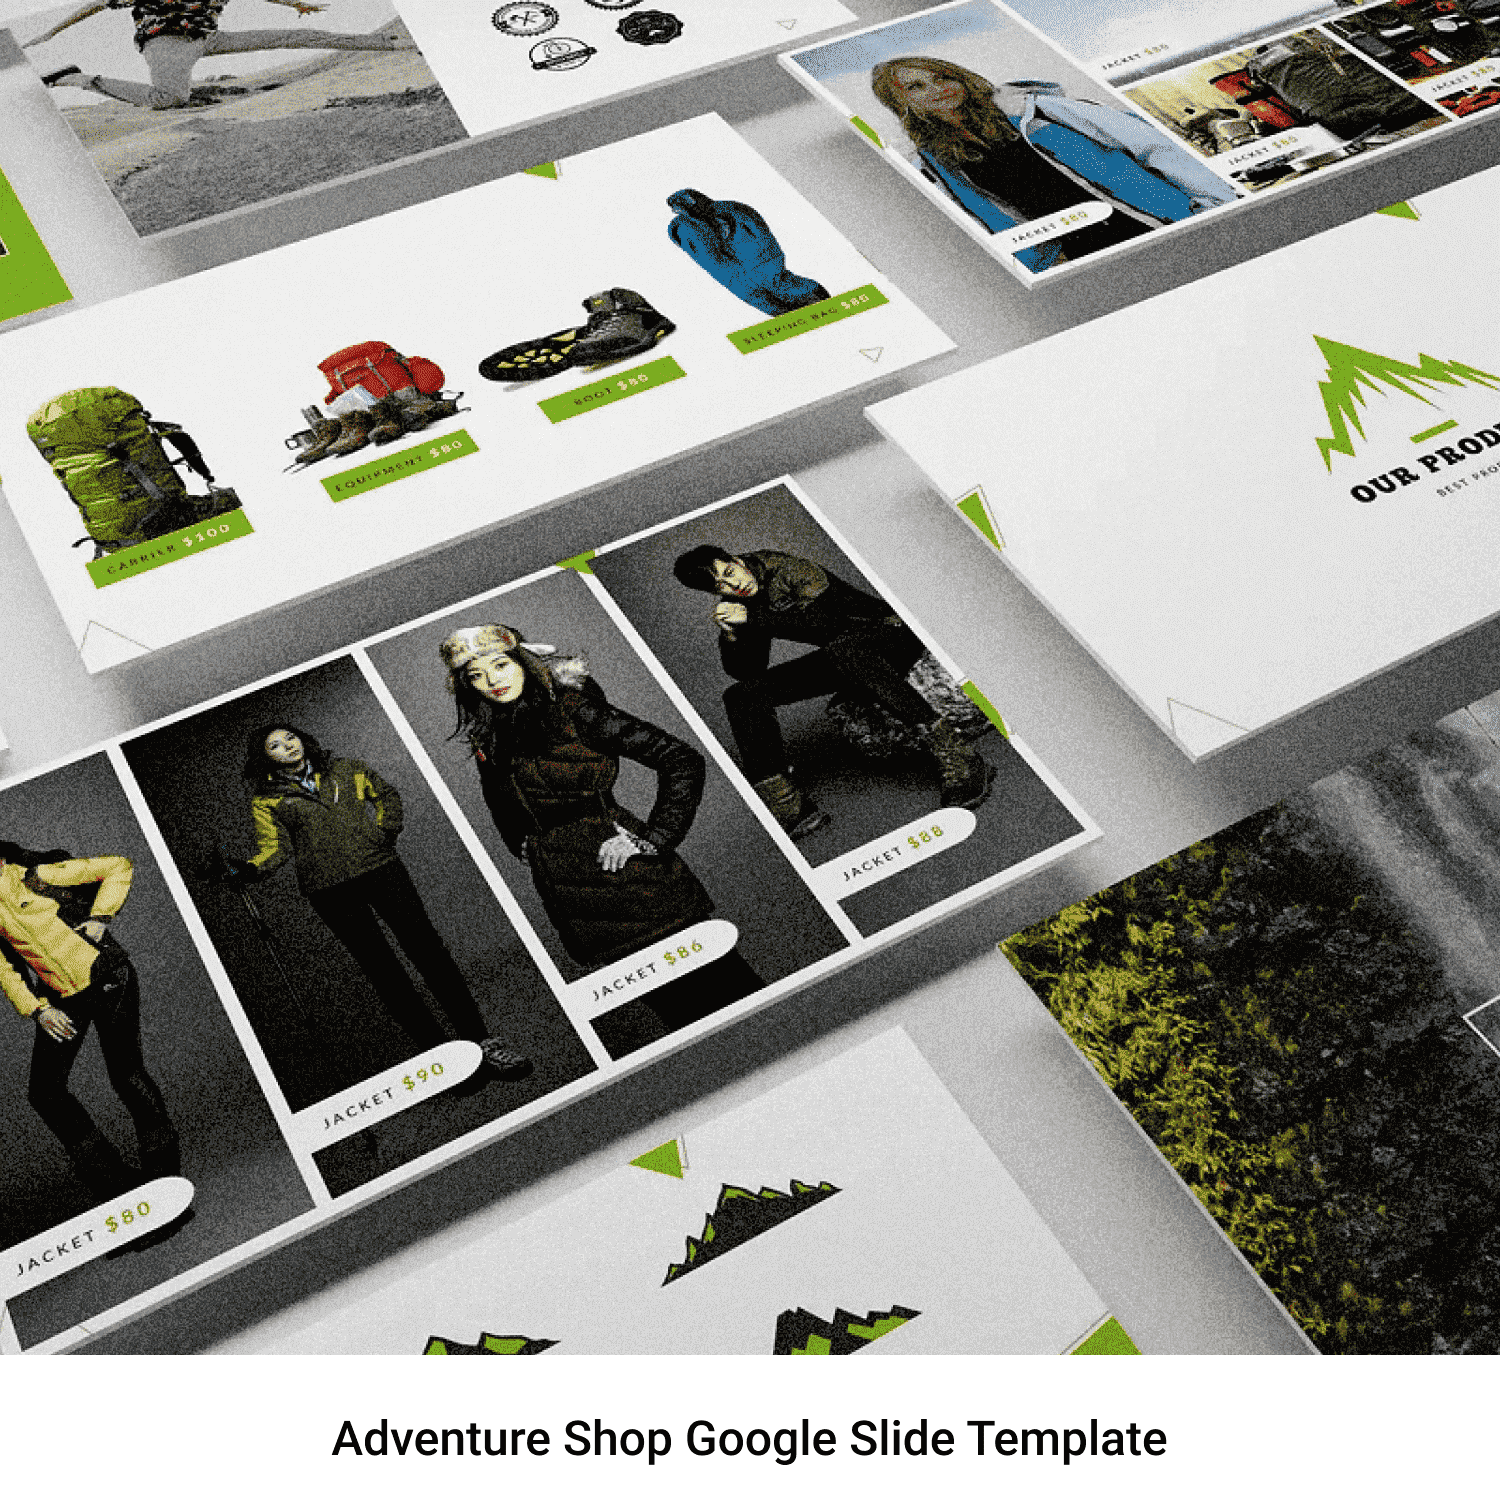 Adventure Shop - Google Slide Template Preview.